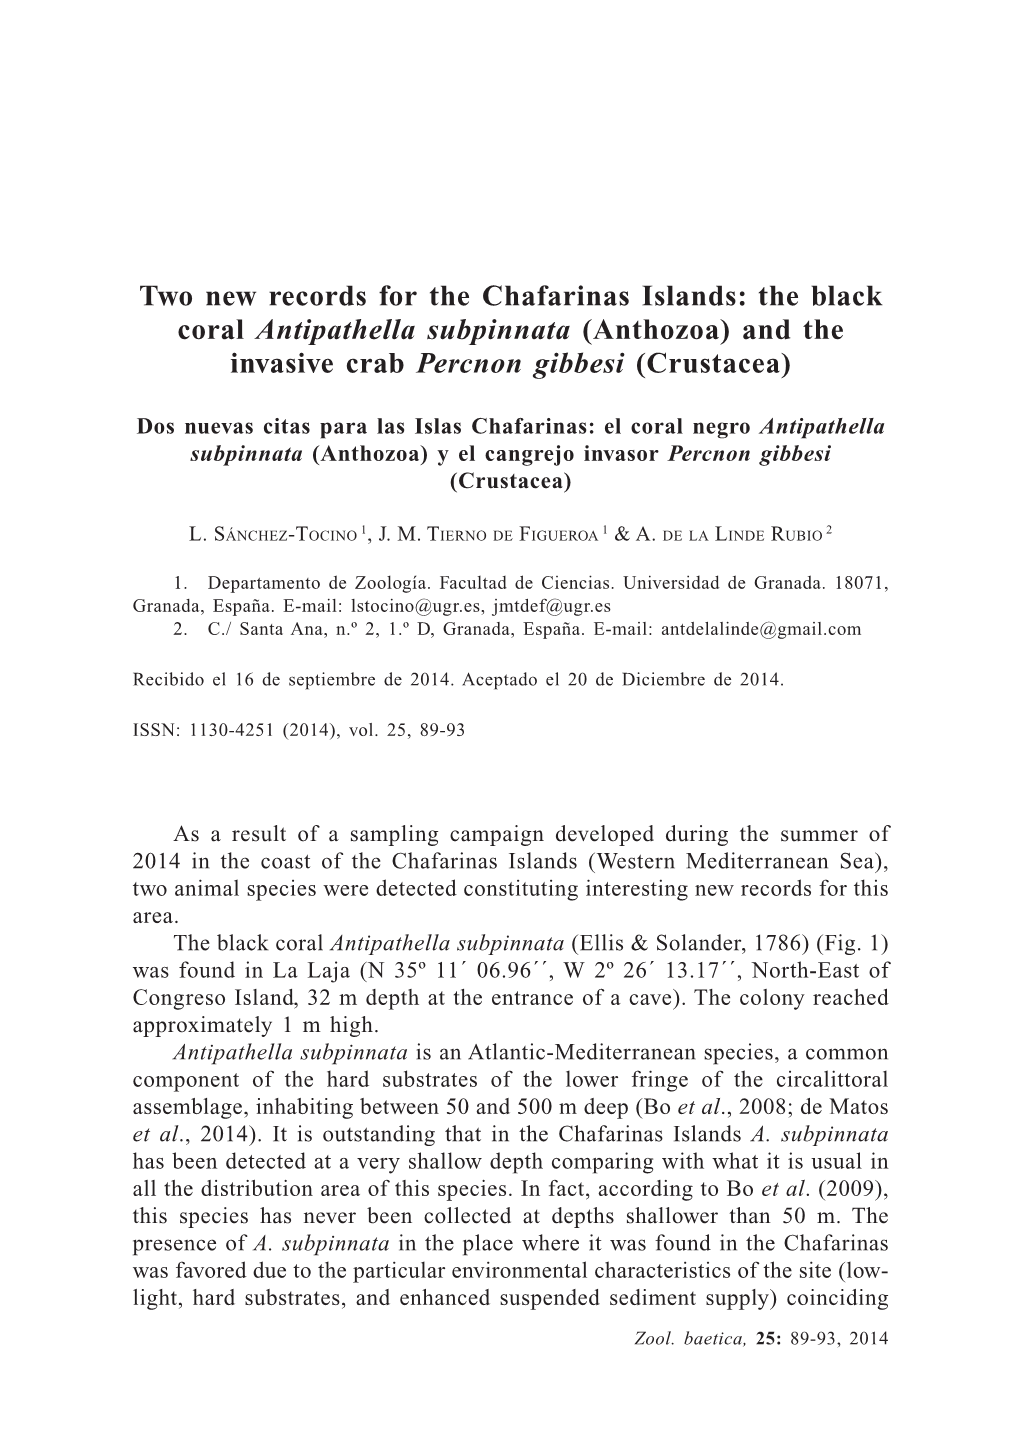 Two New Records for the Chafarinas Islands: the Black Coral Antipathella Subpinnata (Anthozoa) and the Invasive Crab Percnon Gibbesi (Crustacea)